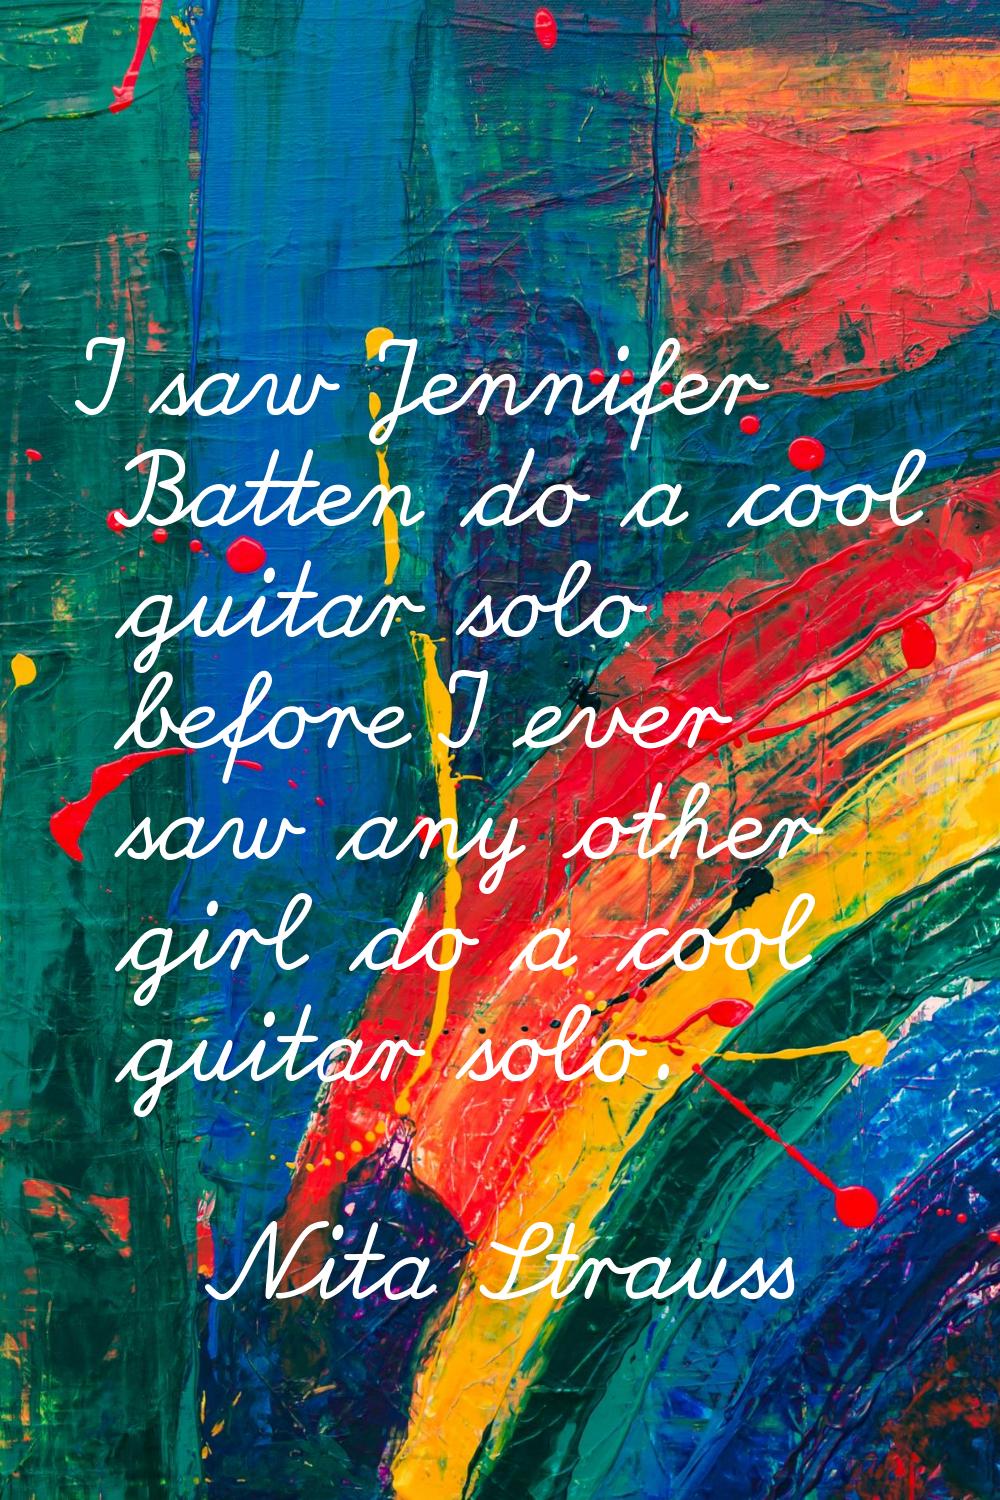 I saw Jennifer Batten do a cool guitar solo before I ever saw any other girl do a cool guitar solo.